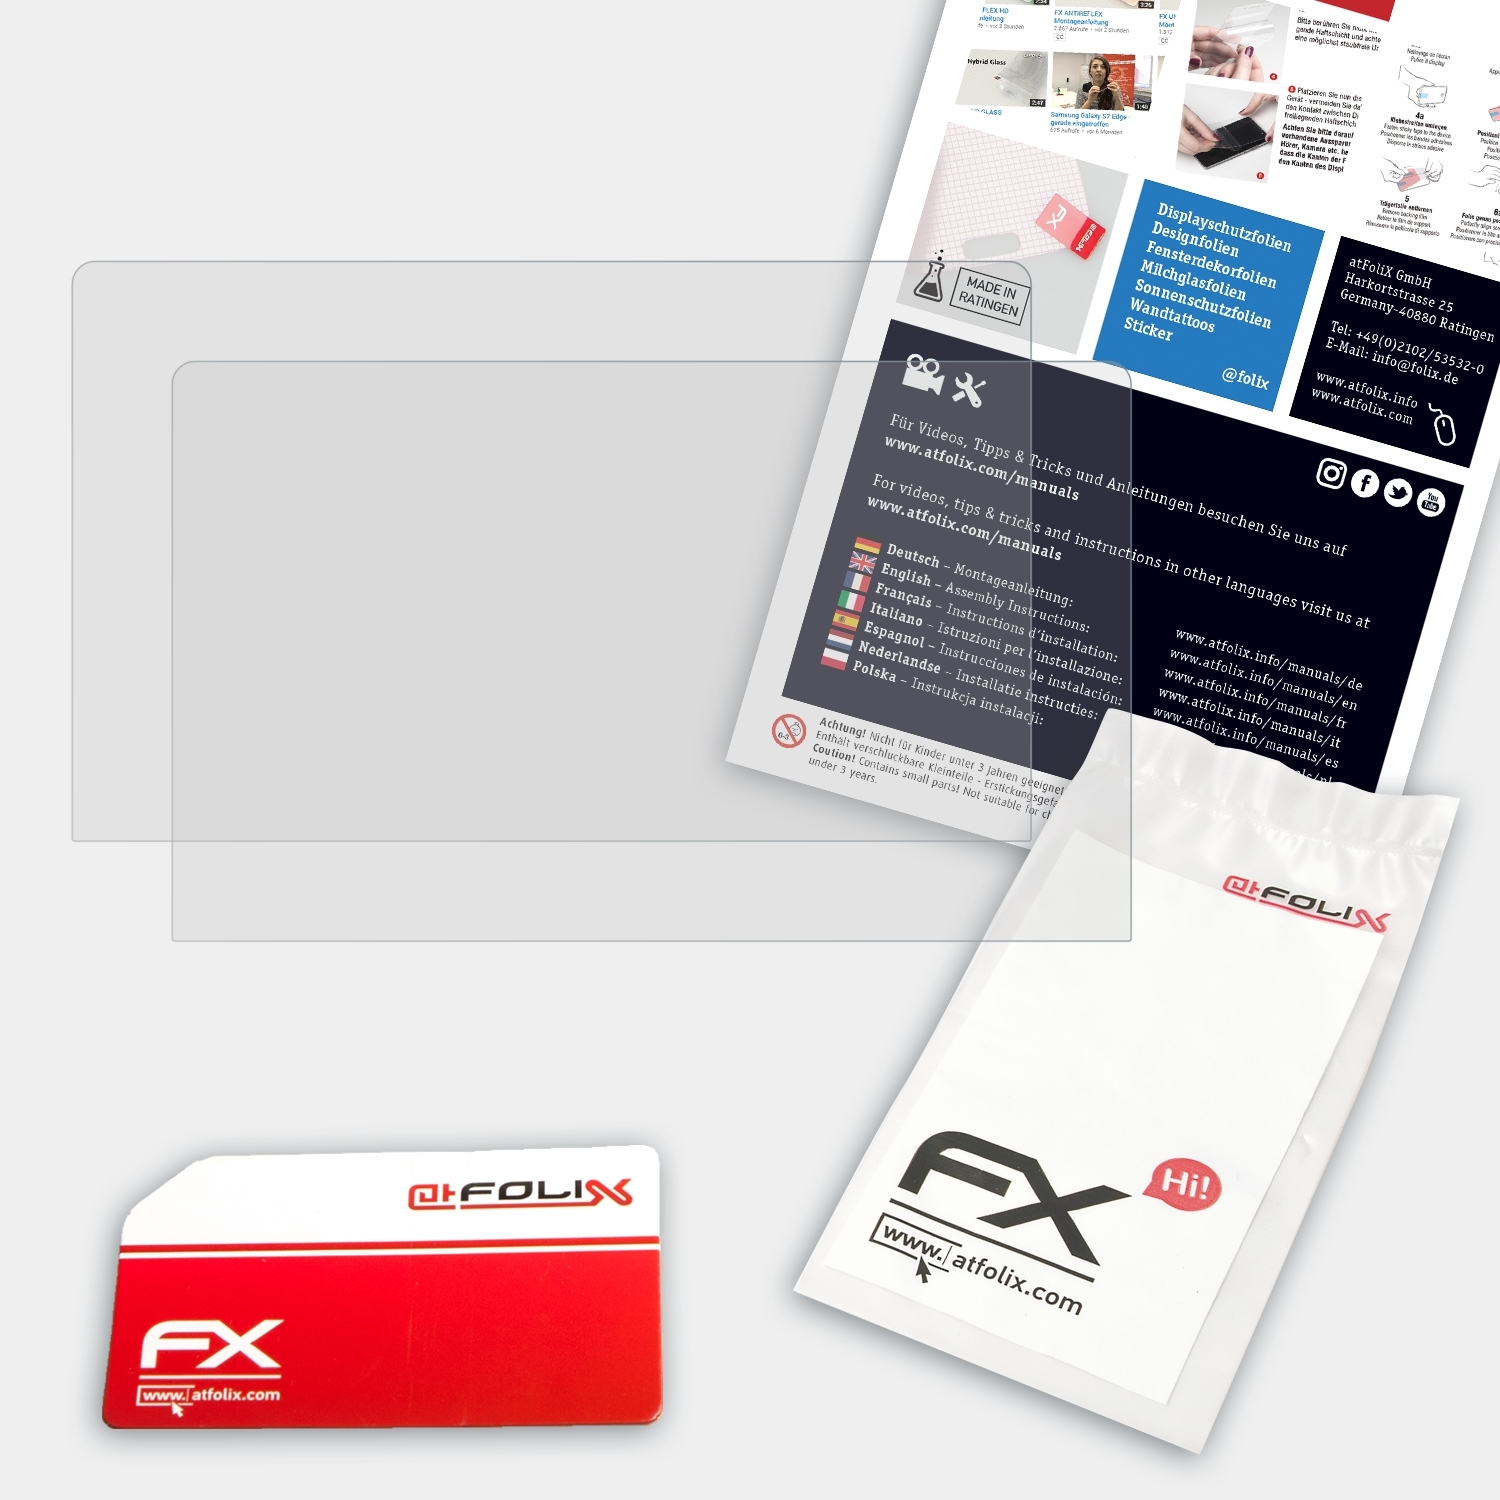 FX-Antireflex ATFOLIX Tab Displayschutz(für Yoga Lenovo 3 8.0) 2x